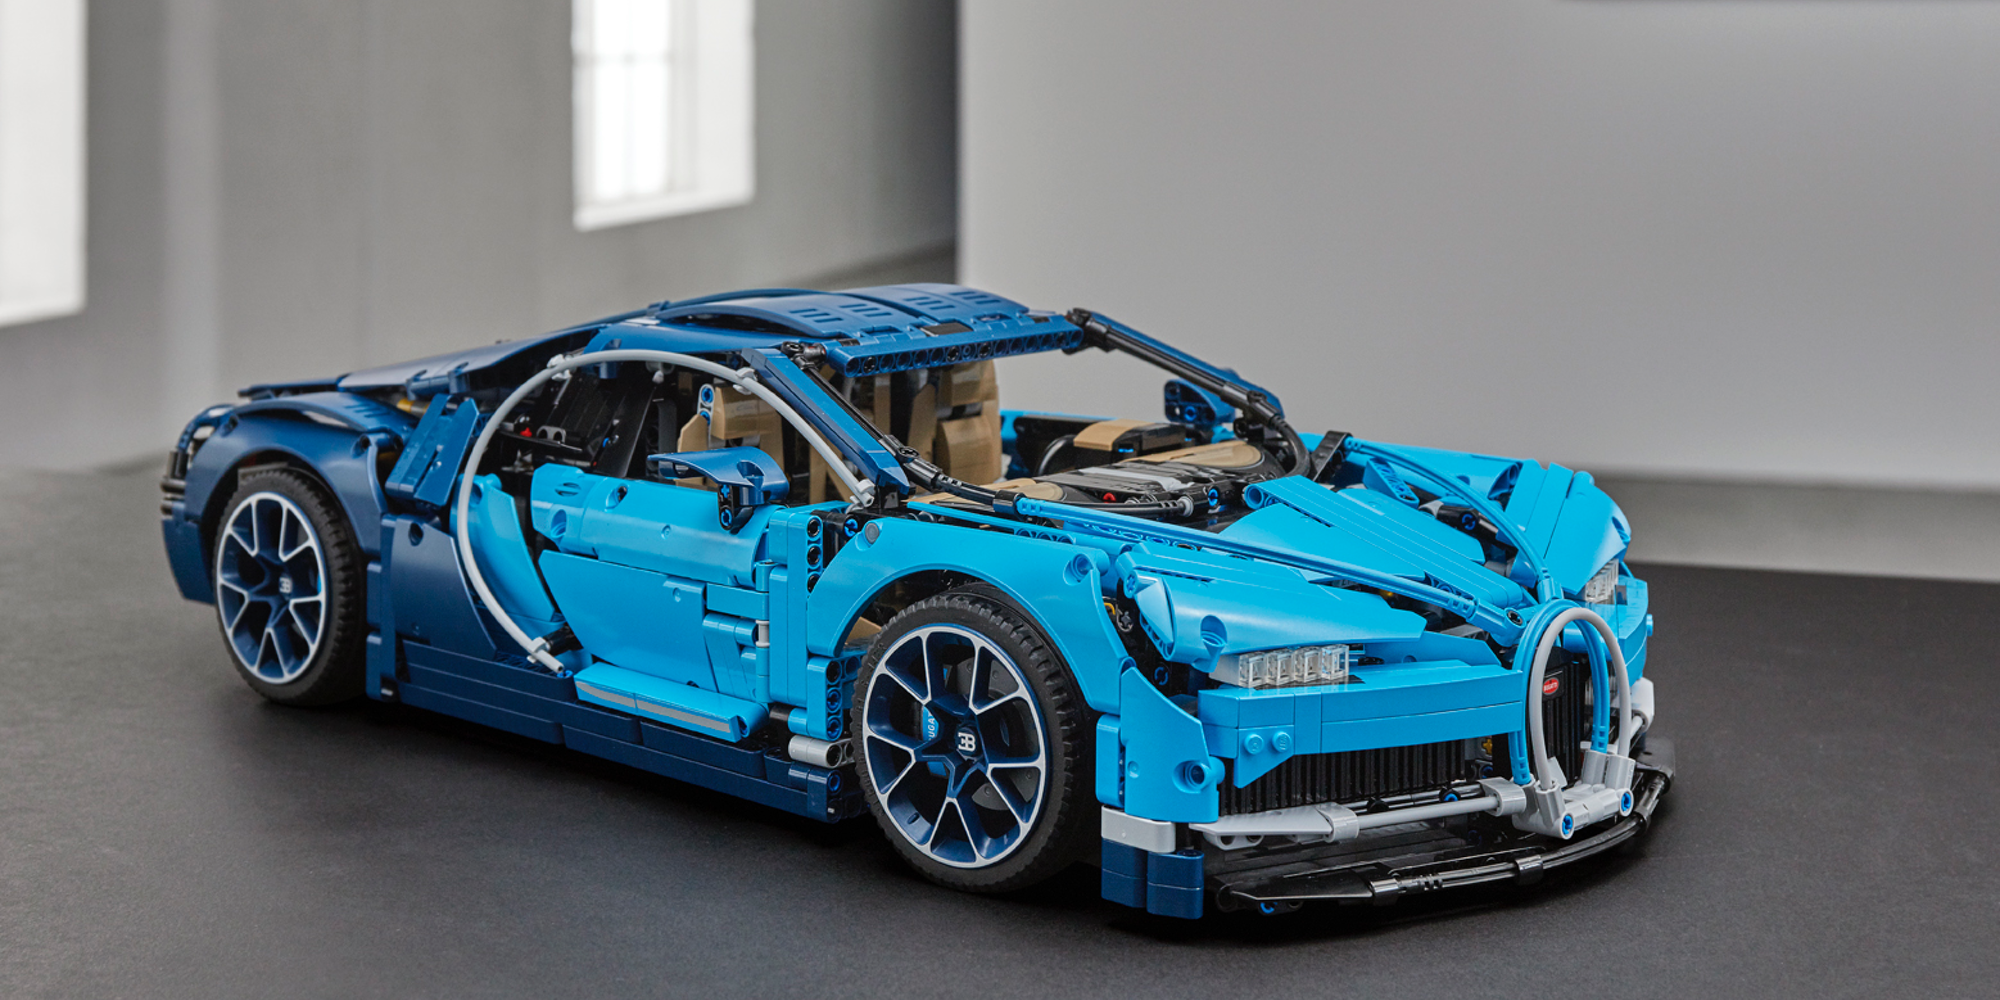 FREE SHIPPING LEGO Bugatti Chiron Technic 42083 